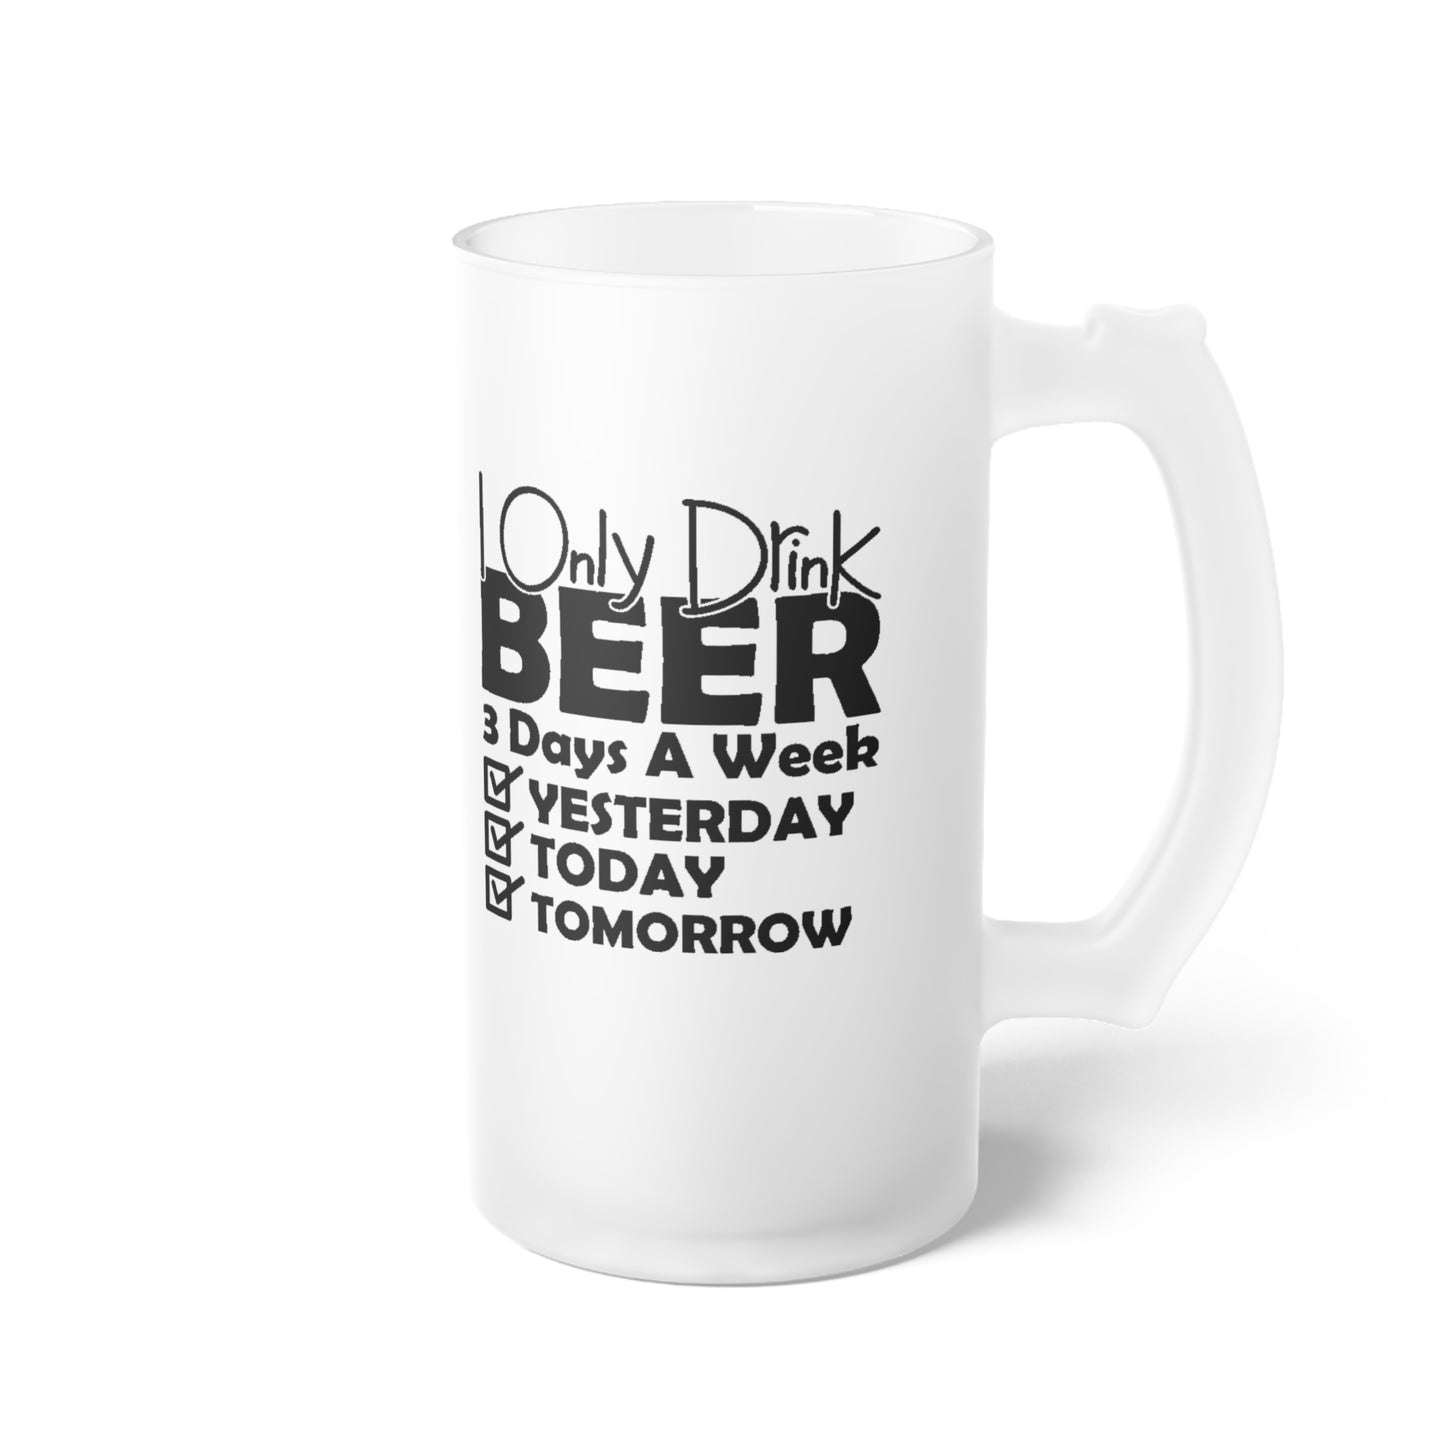 I Only Drink Beer 3 Days A Week...  - Frosted Glass Beer Mug